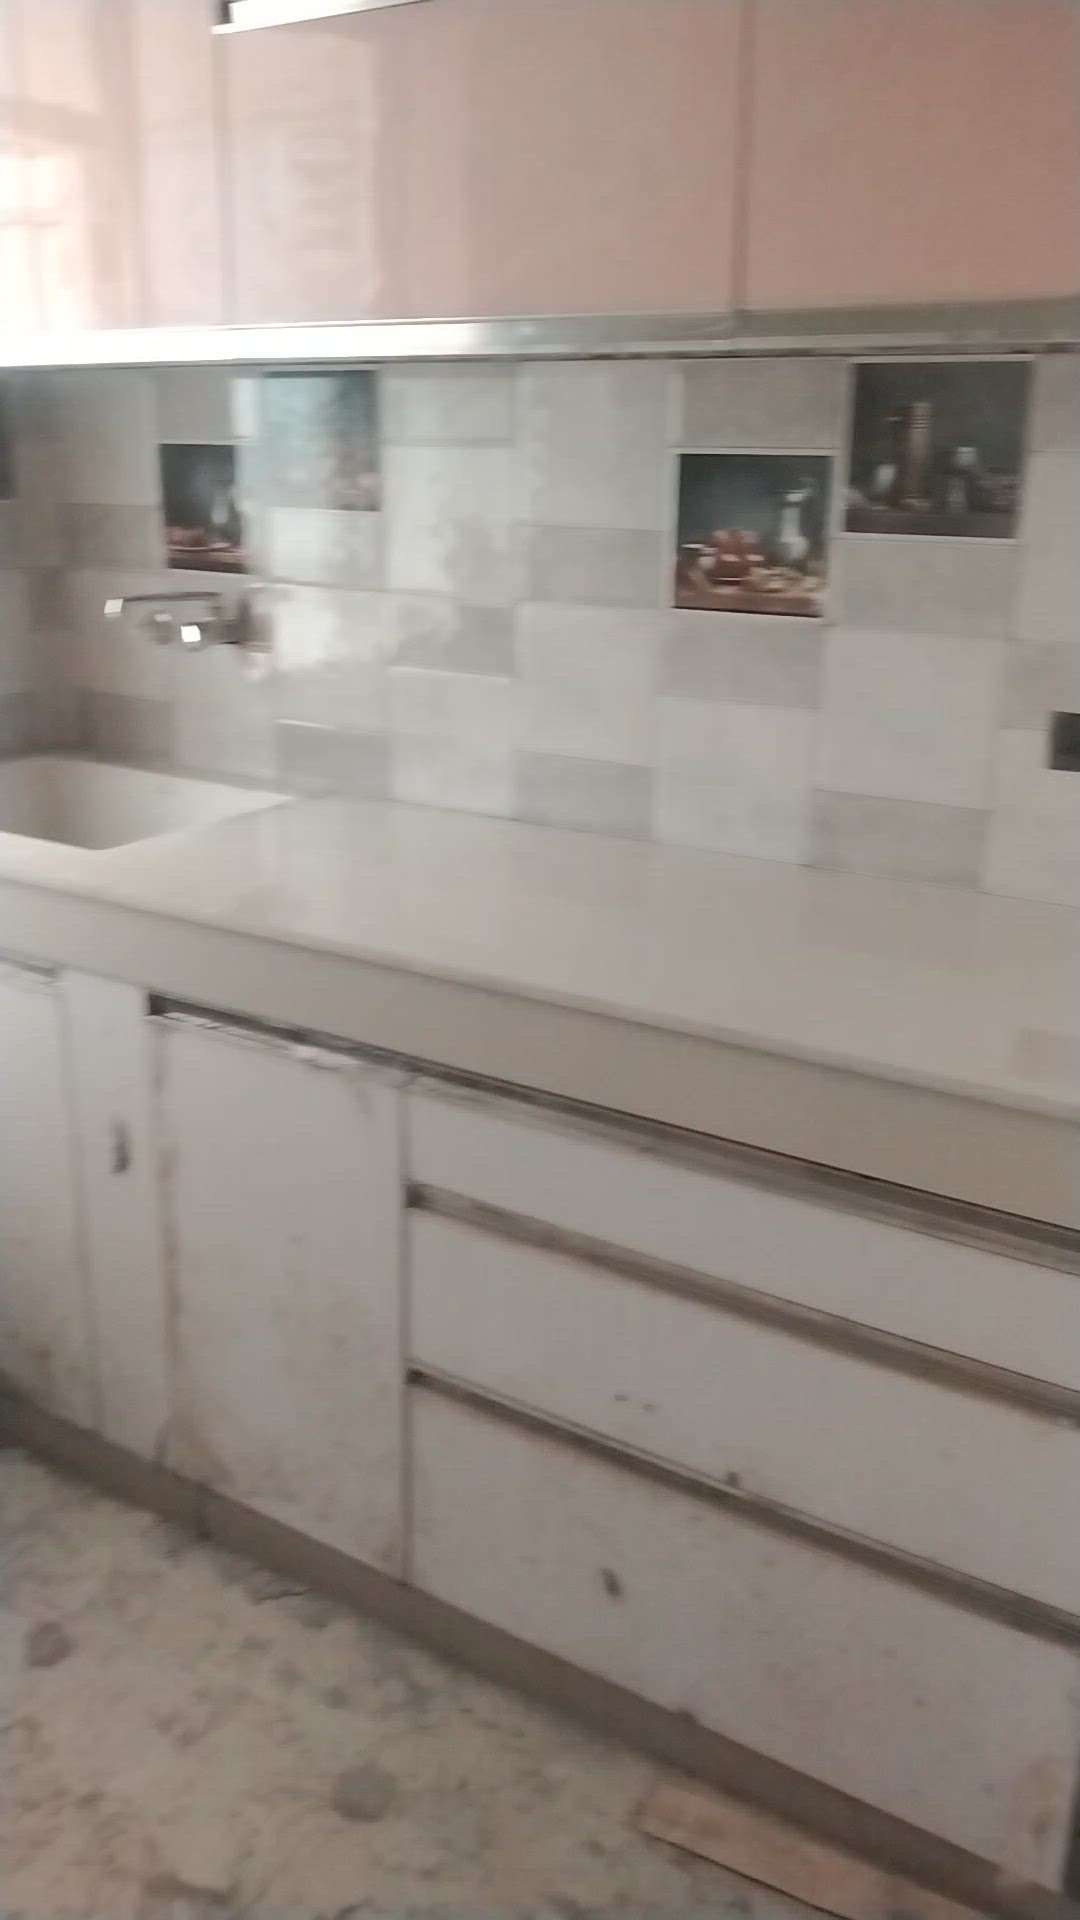 indu interior work ke dawara
tiles pathar penter carpenter contractor